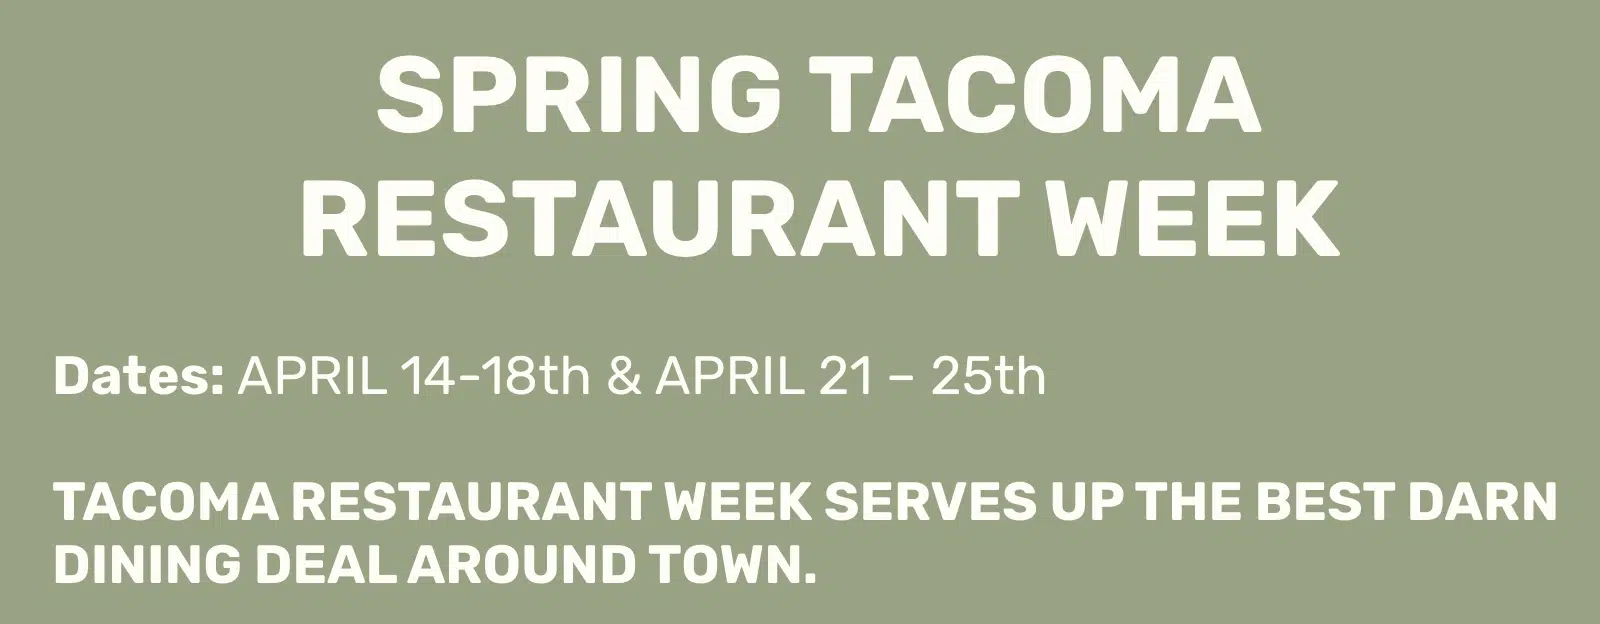 Spring Tacoma restaurant week